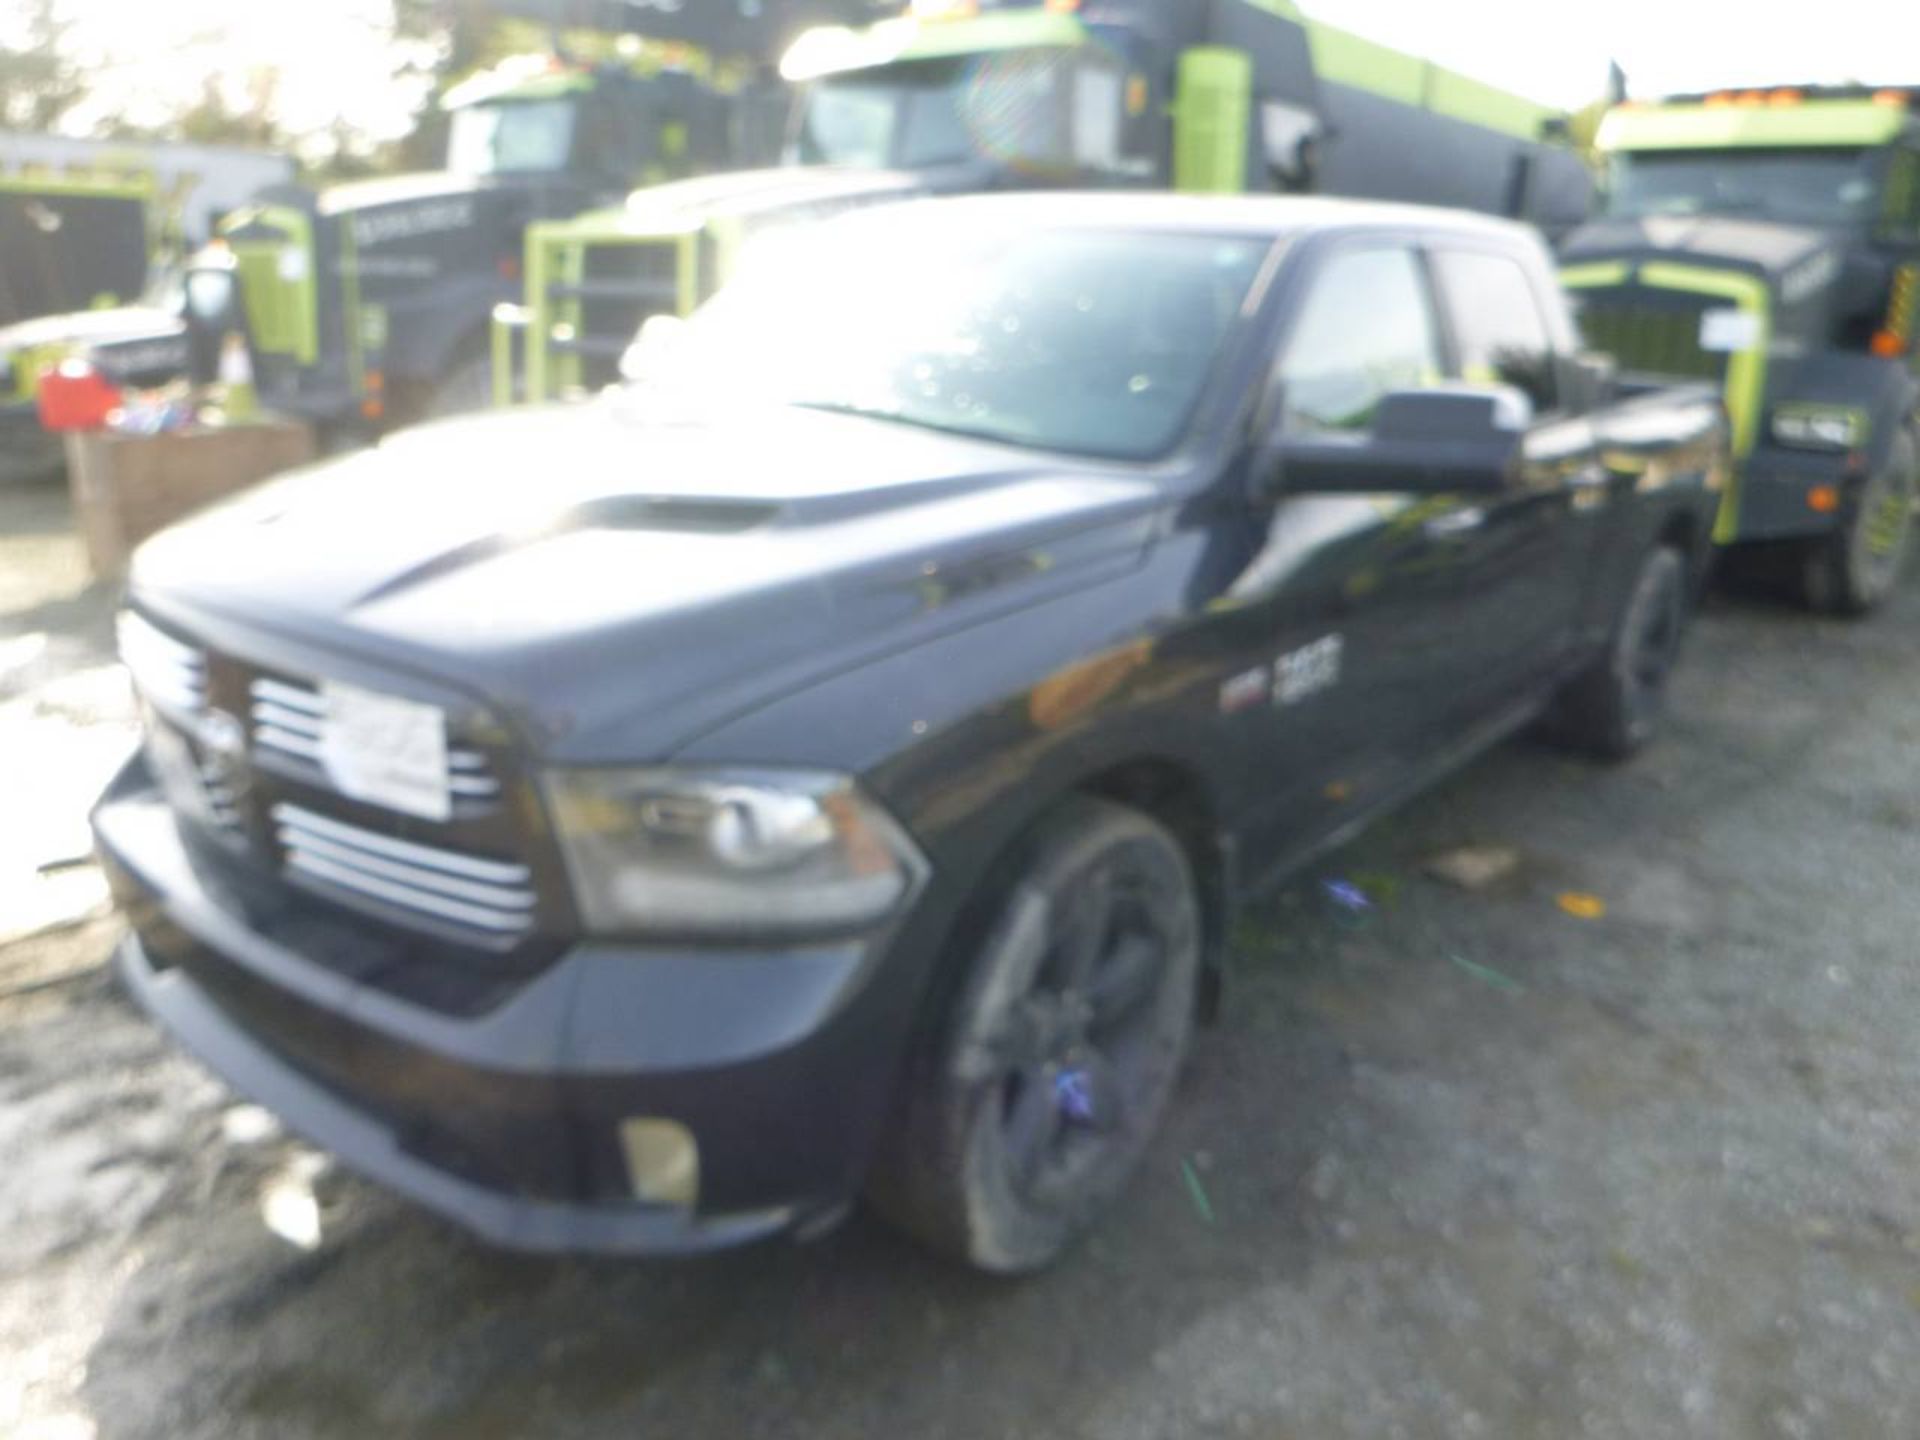 2014 Dodge Ram 1500 Pick up truck